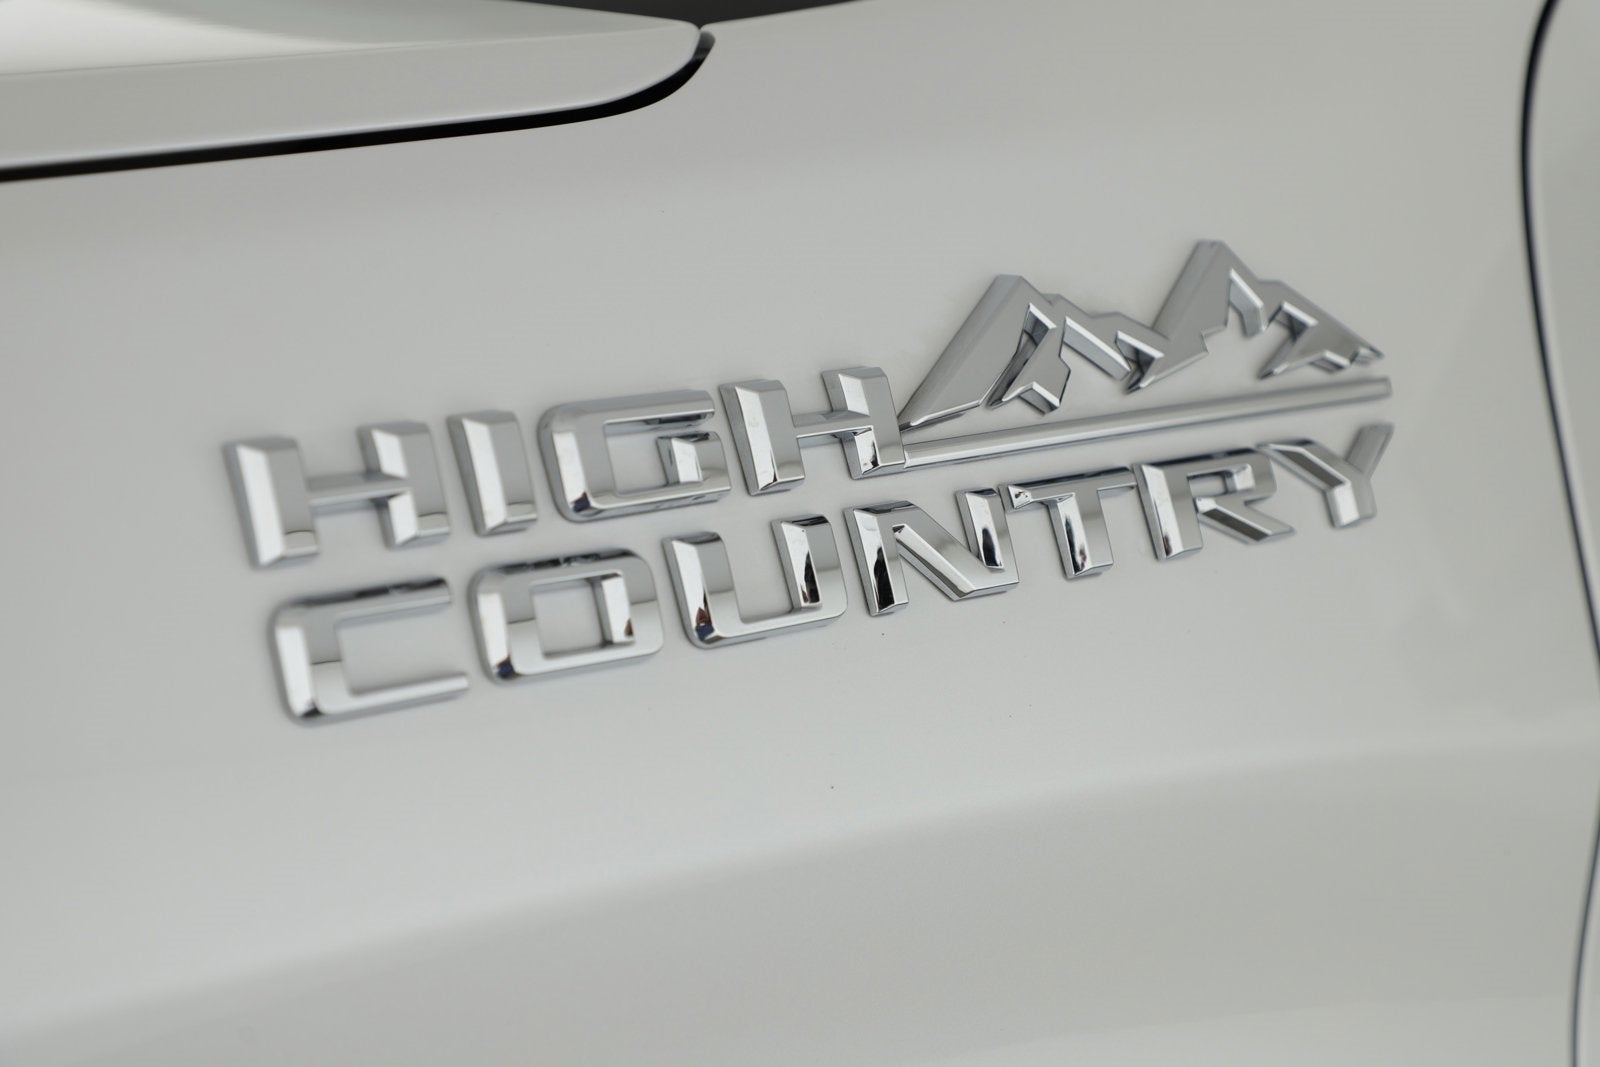 2021 Chevrolet Silverado 1500 High Country